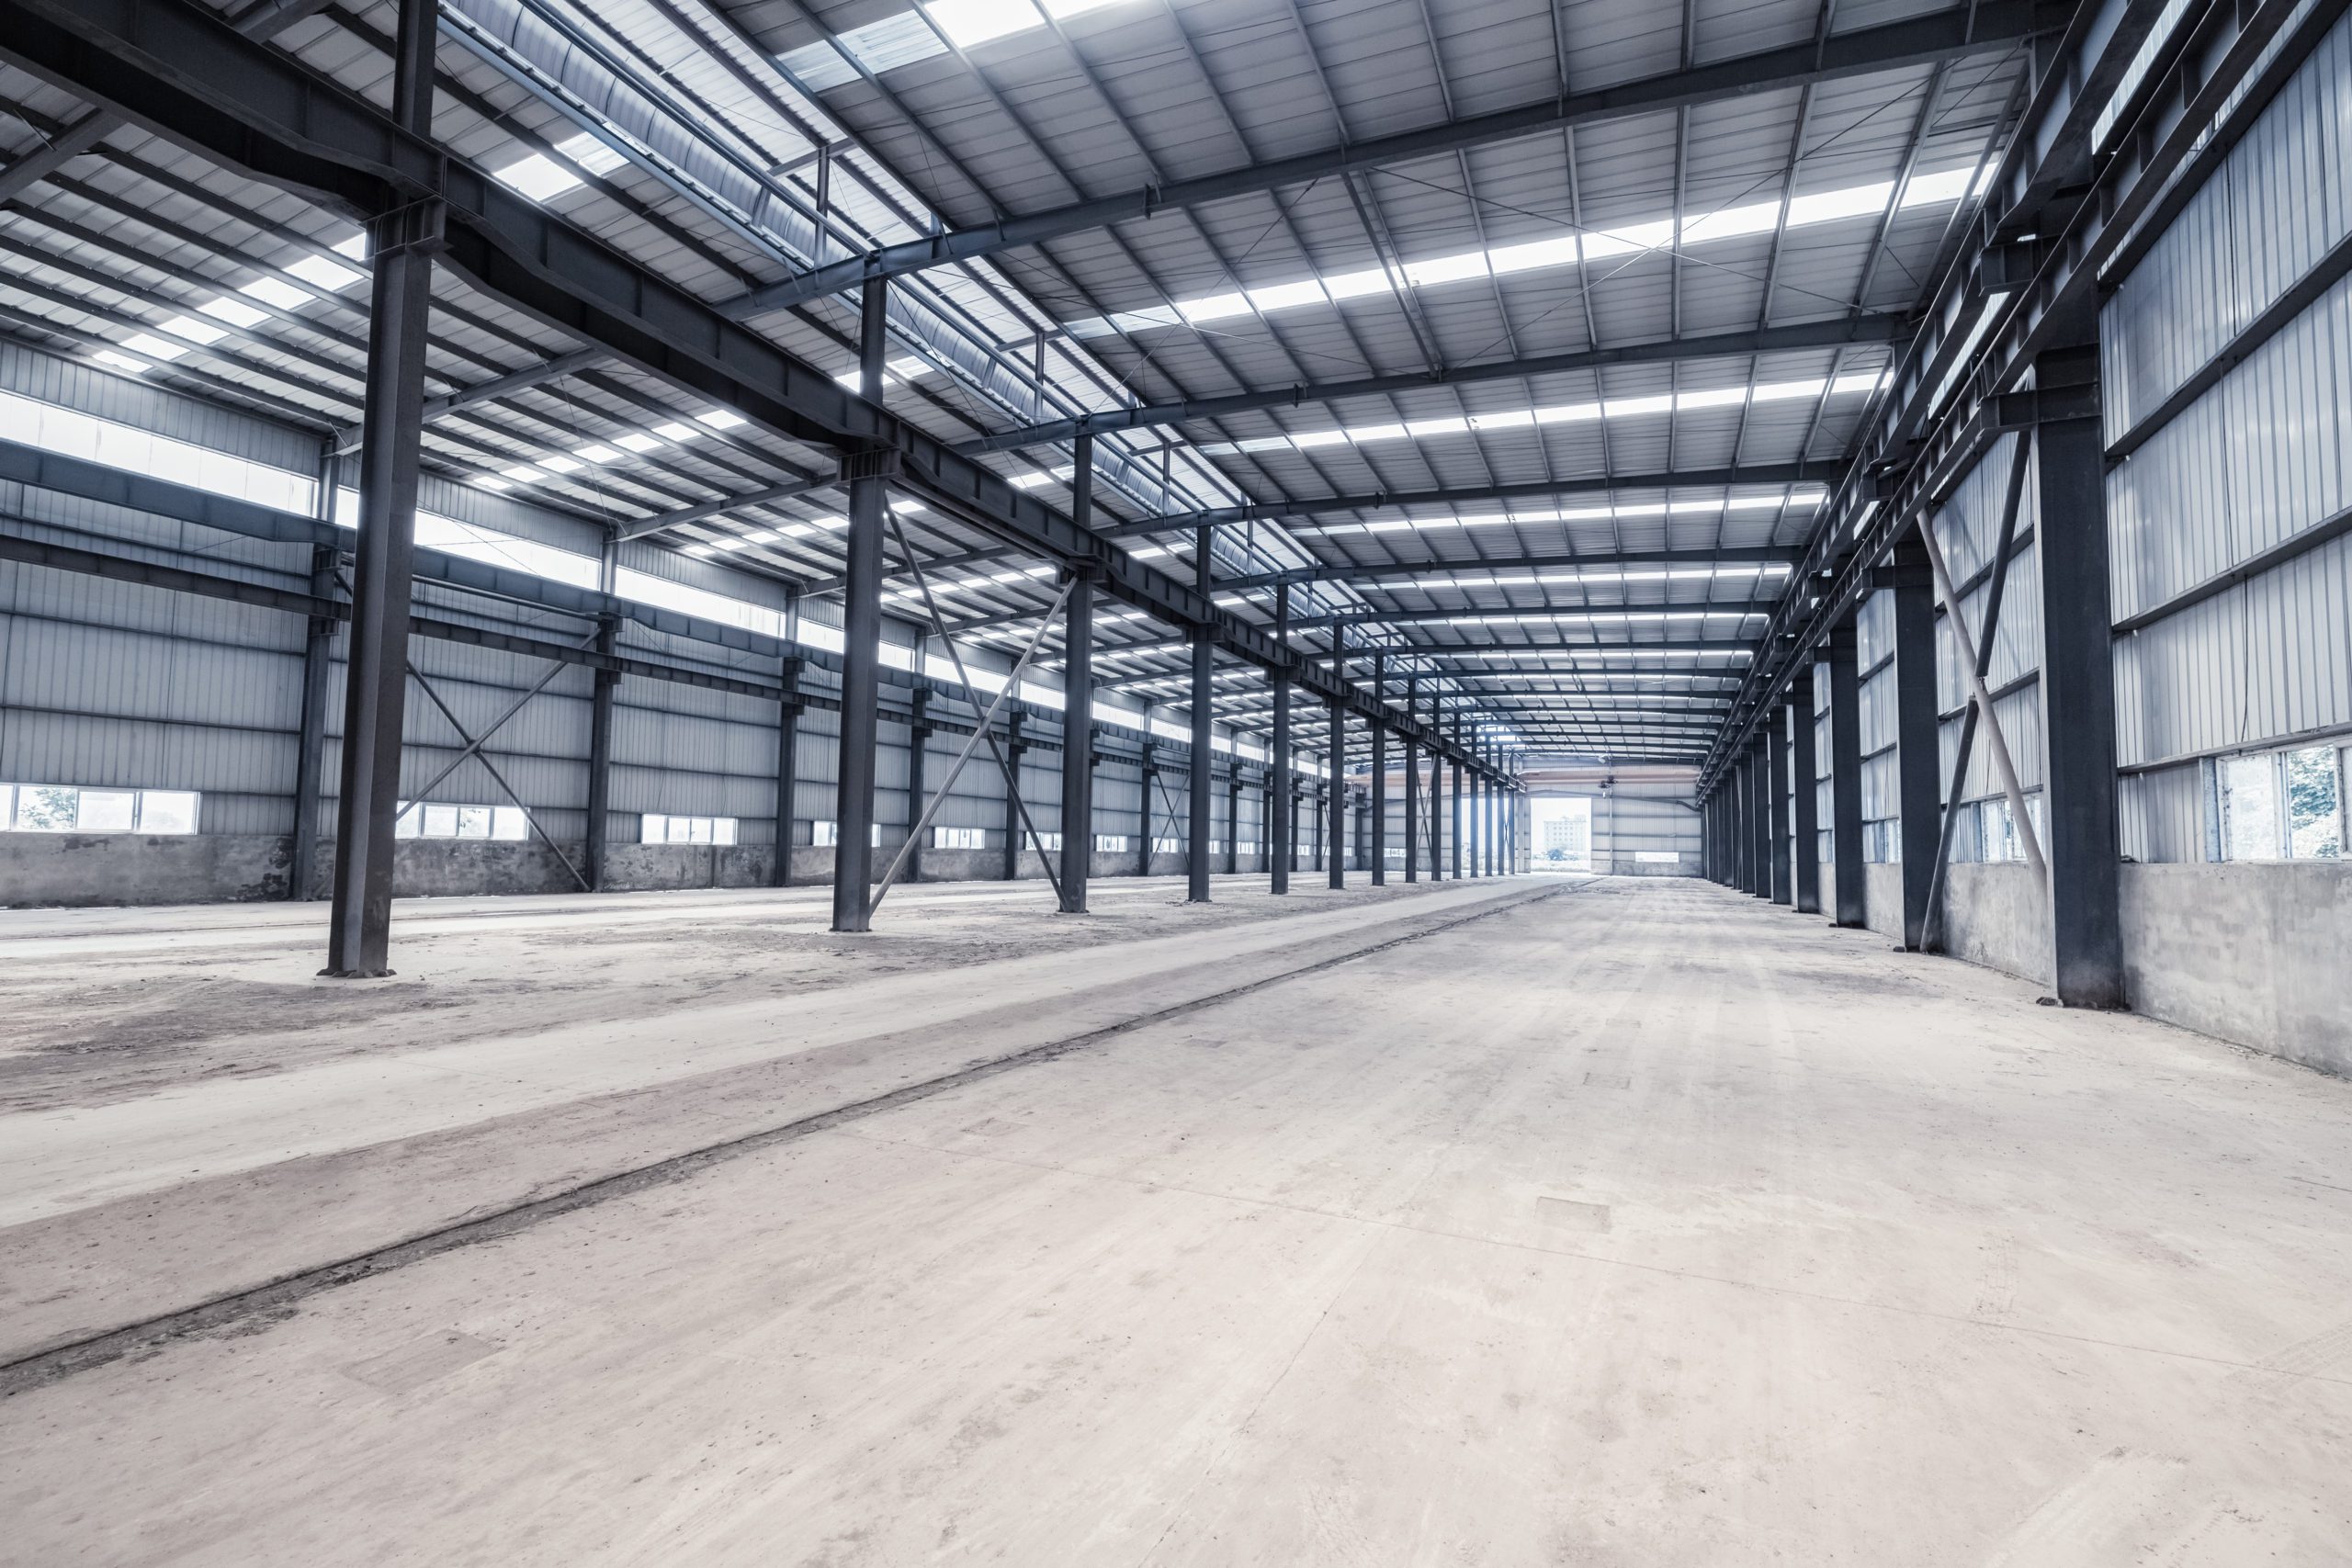 A warehousing facility